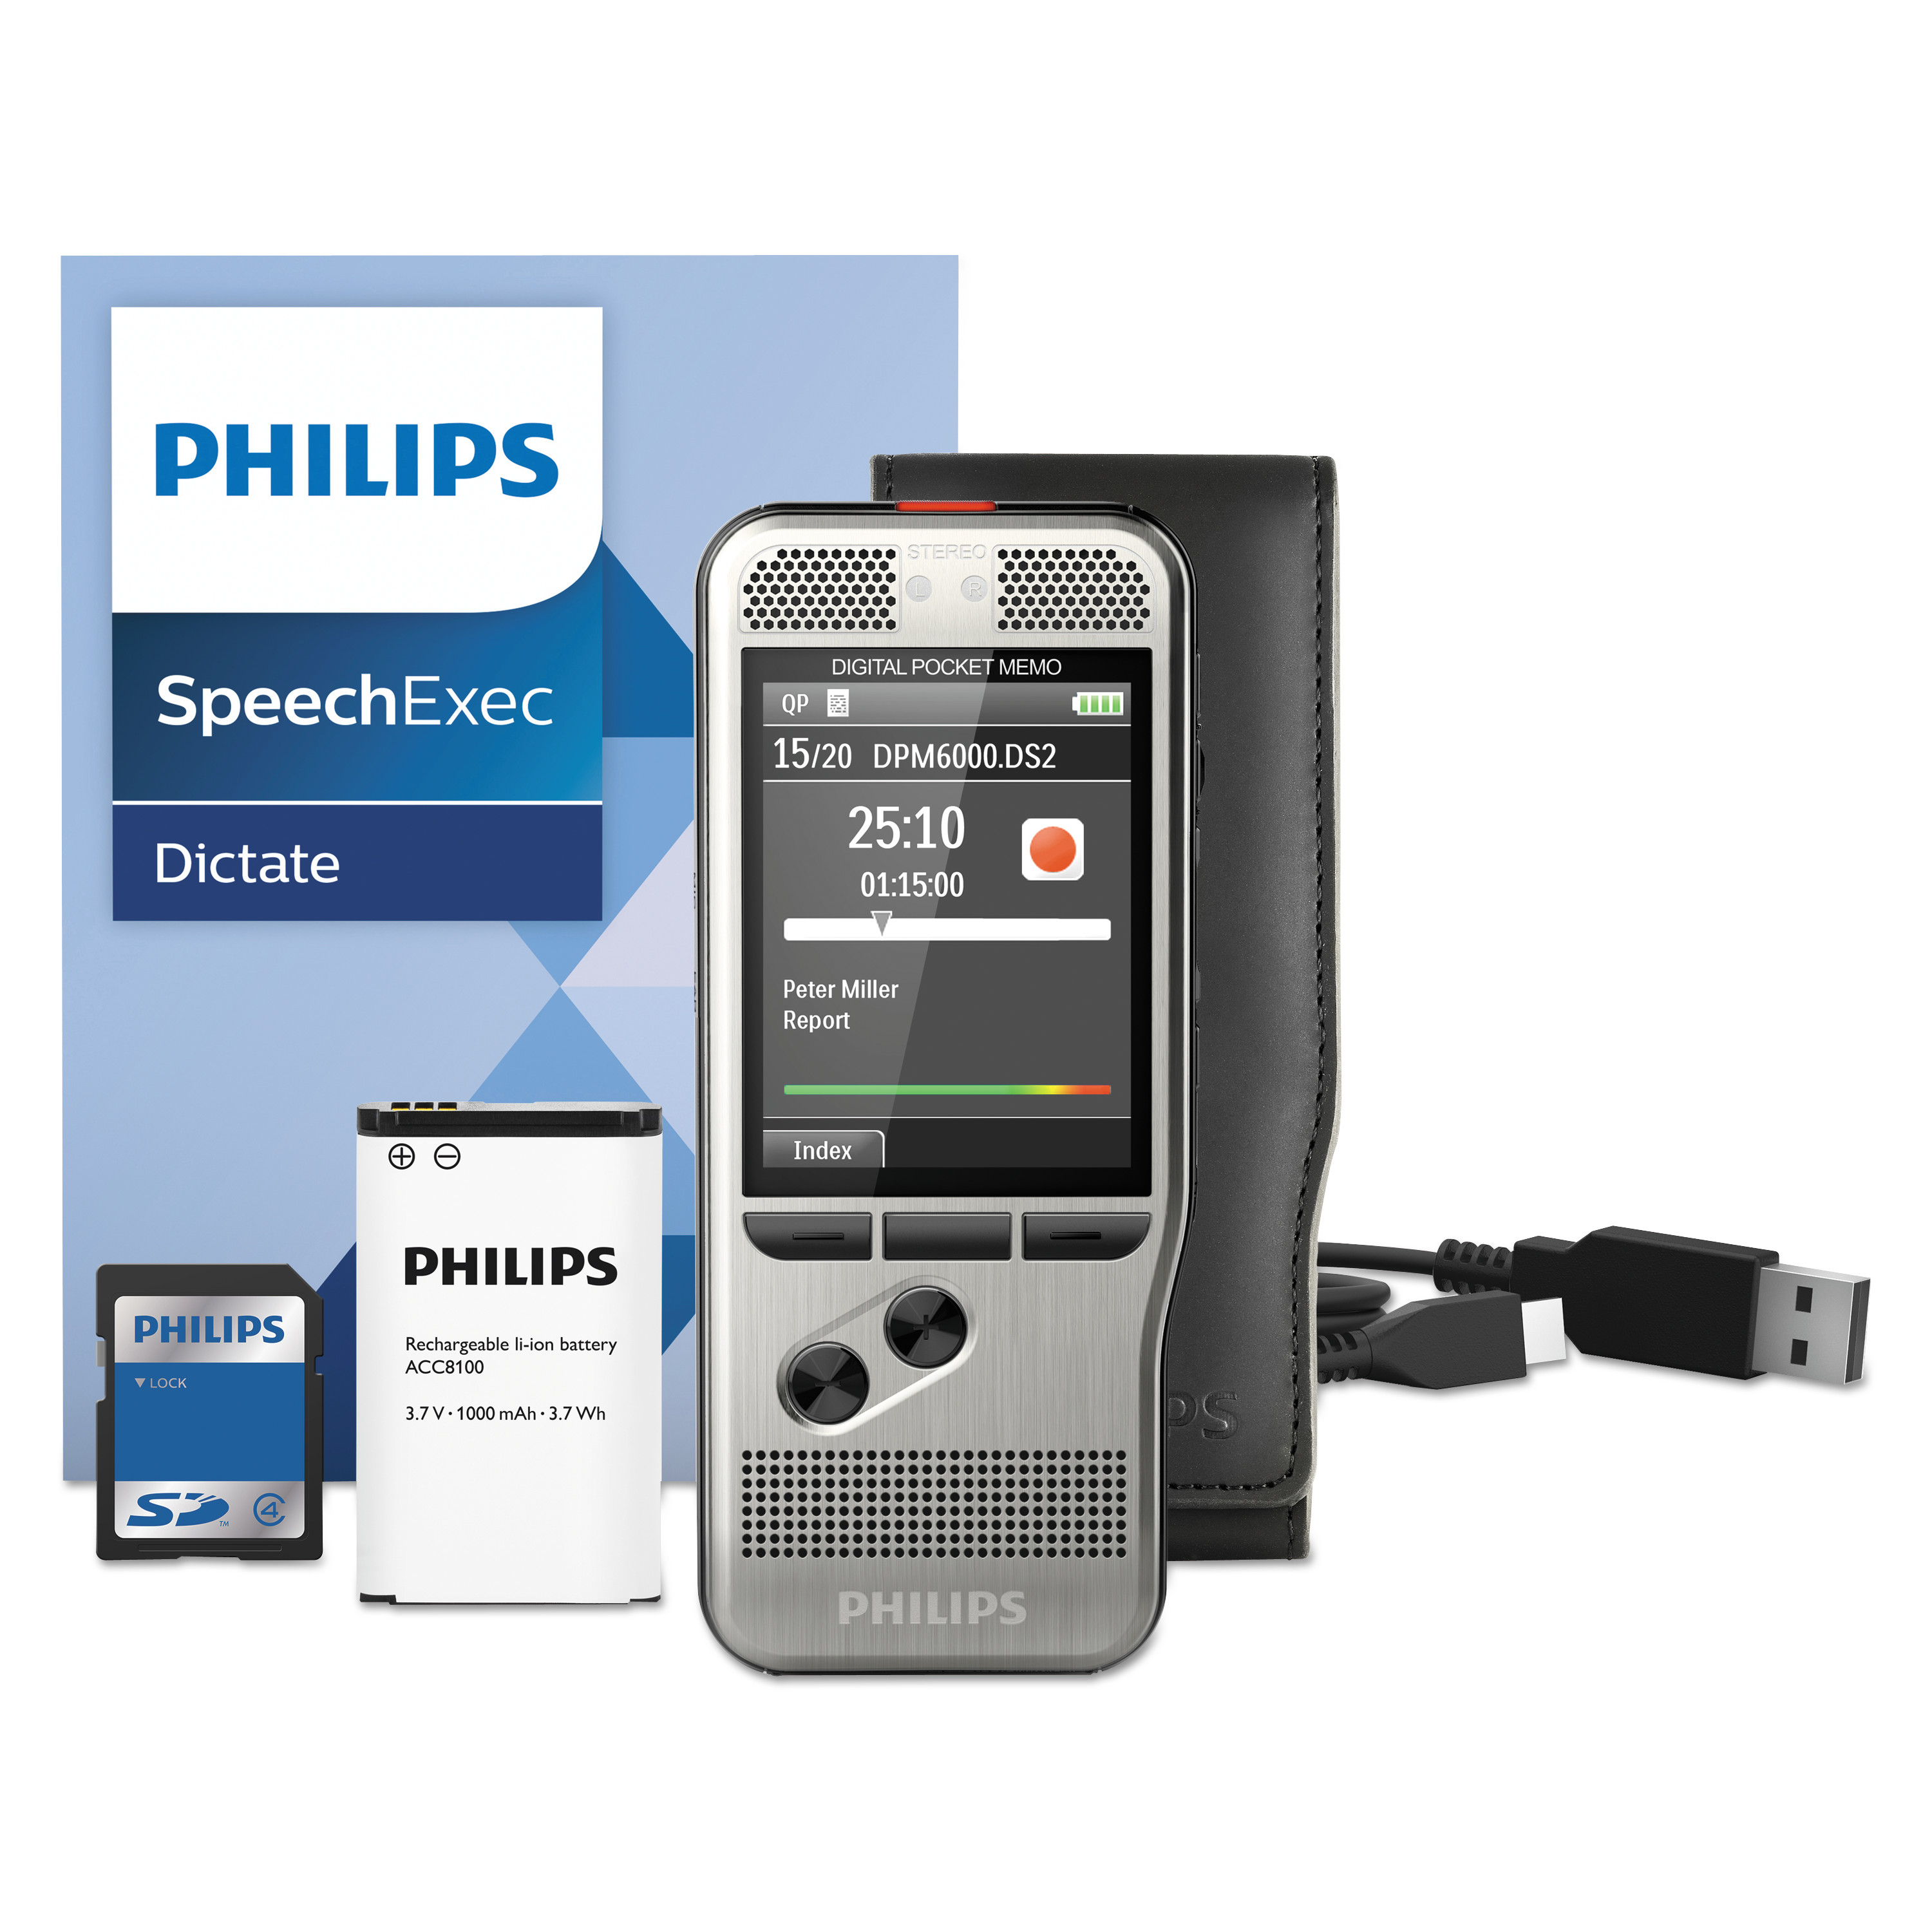 Philips Pocket Memo 6000 Digital Recorder, Push Button, 2GB, Silver - image 1 of 6